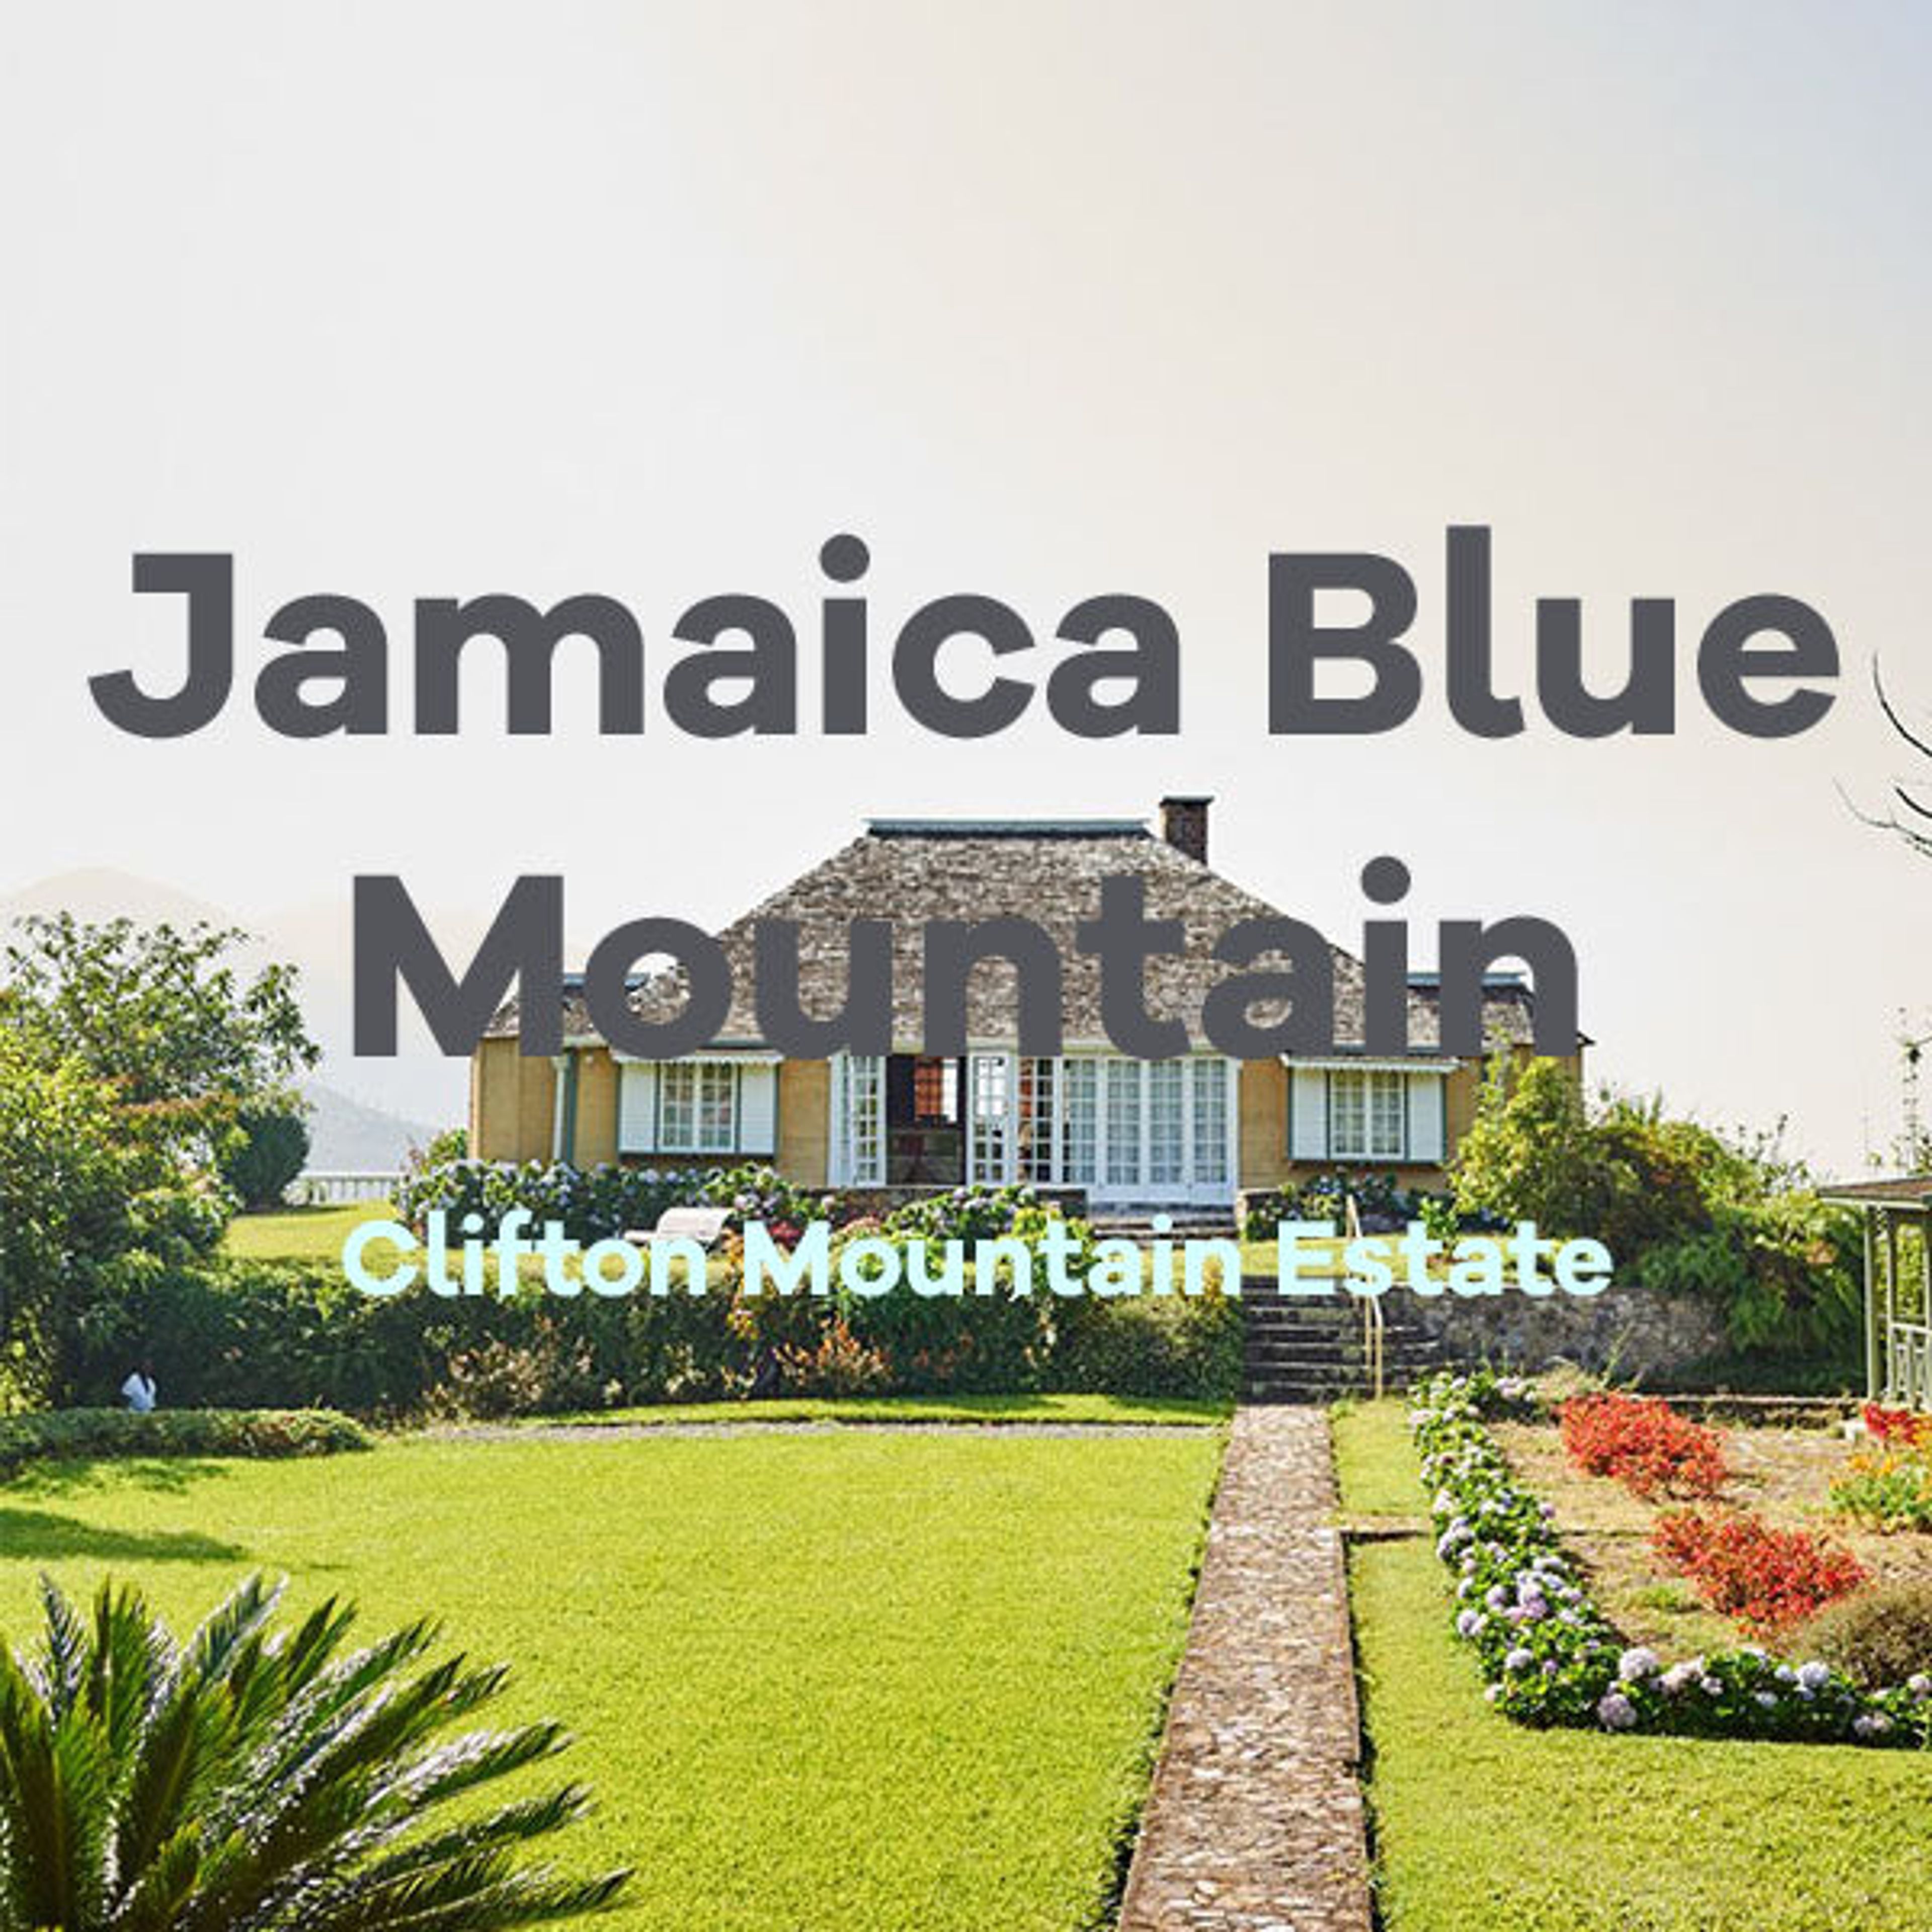 Jamaica Blue Mountains Coffee Roasters Gift Box